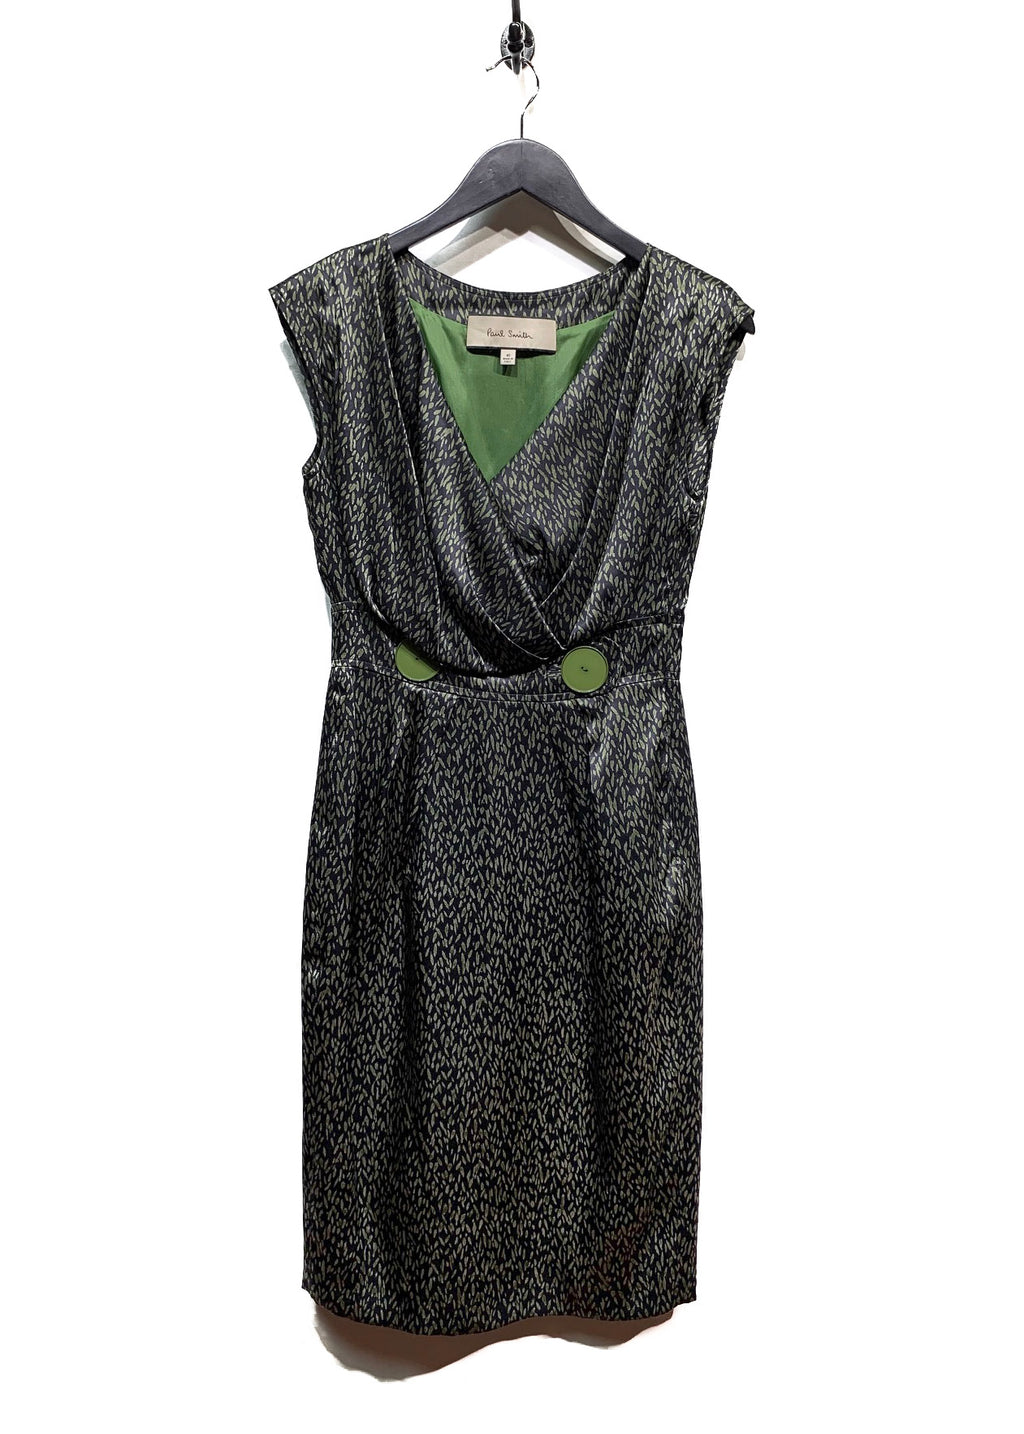 Paul Smith Green Leaf Patterns Sleeveless Dress